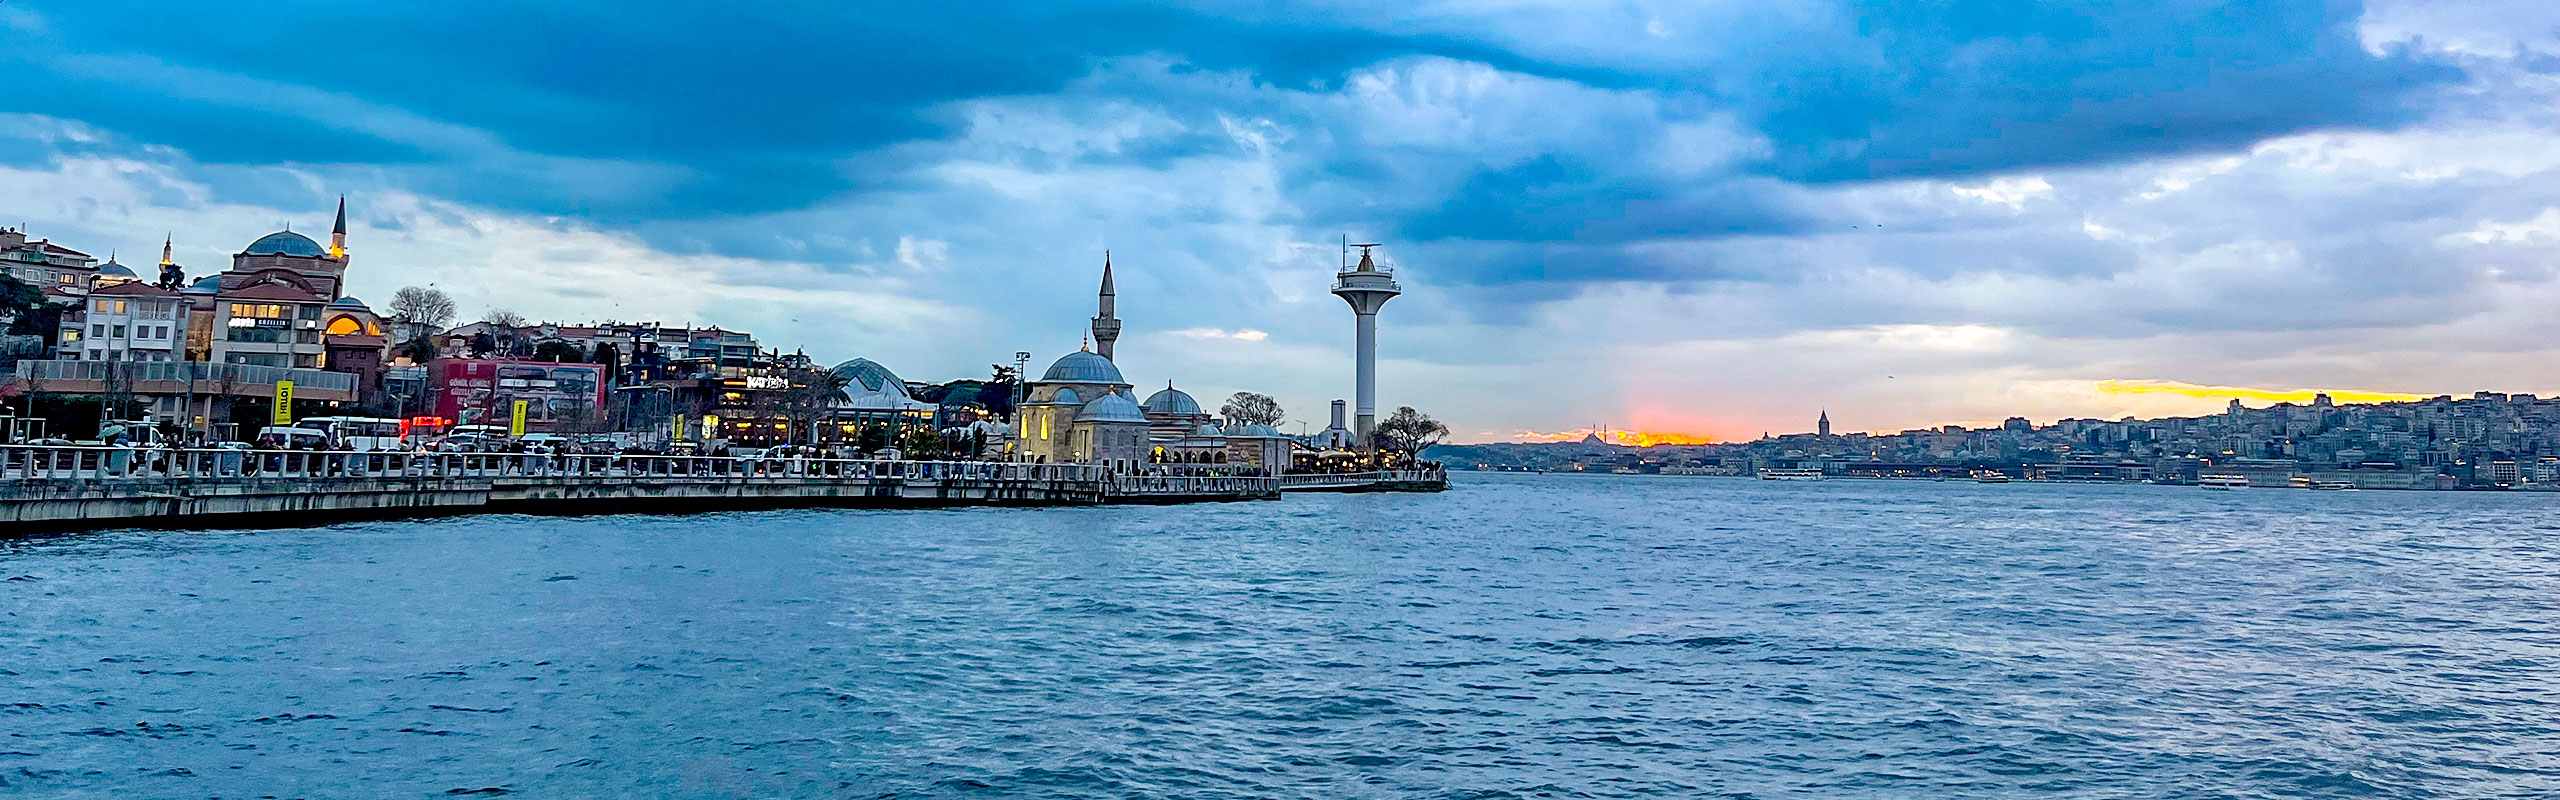 Istanbul Old City, Turkey